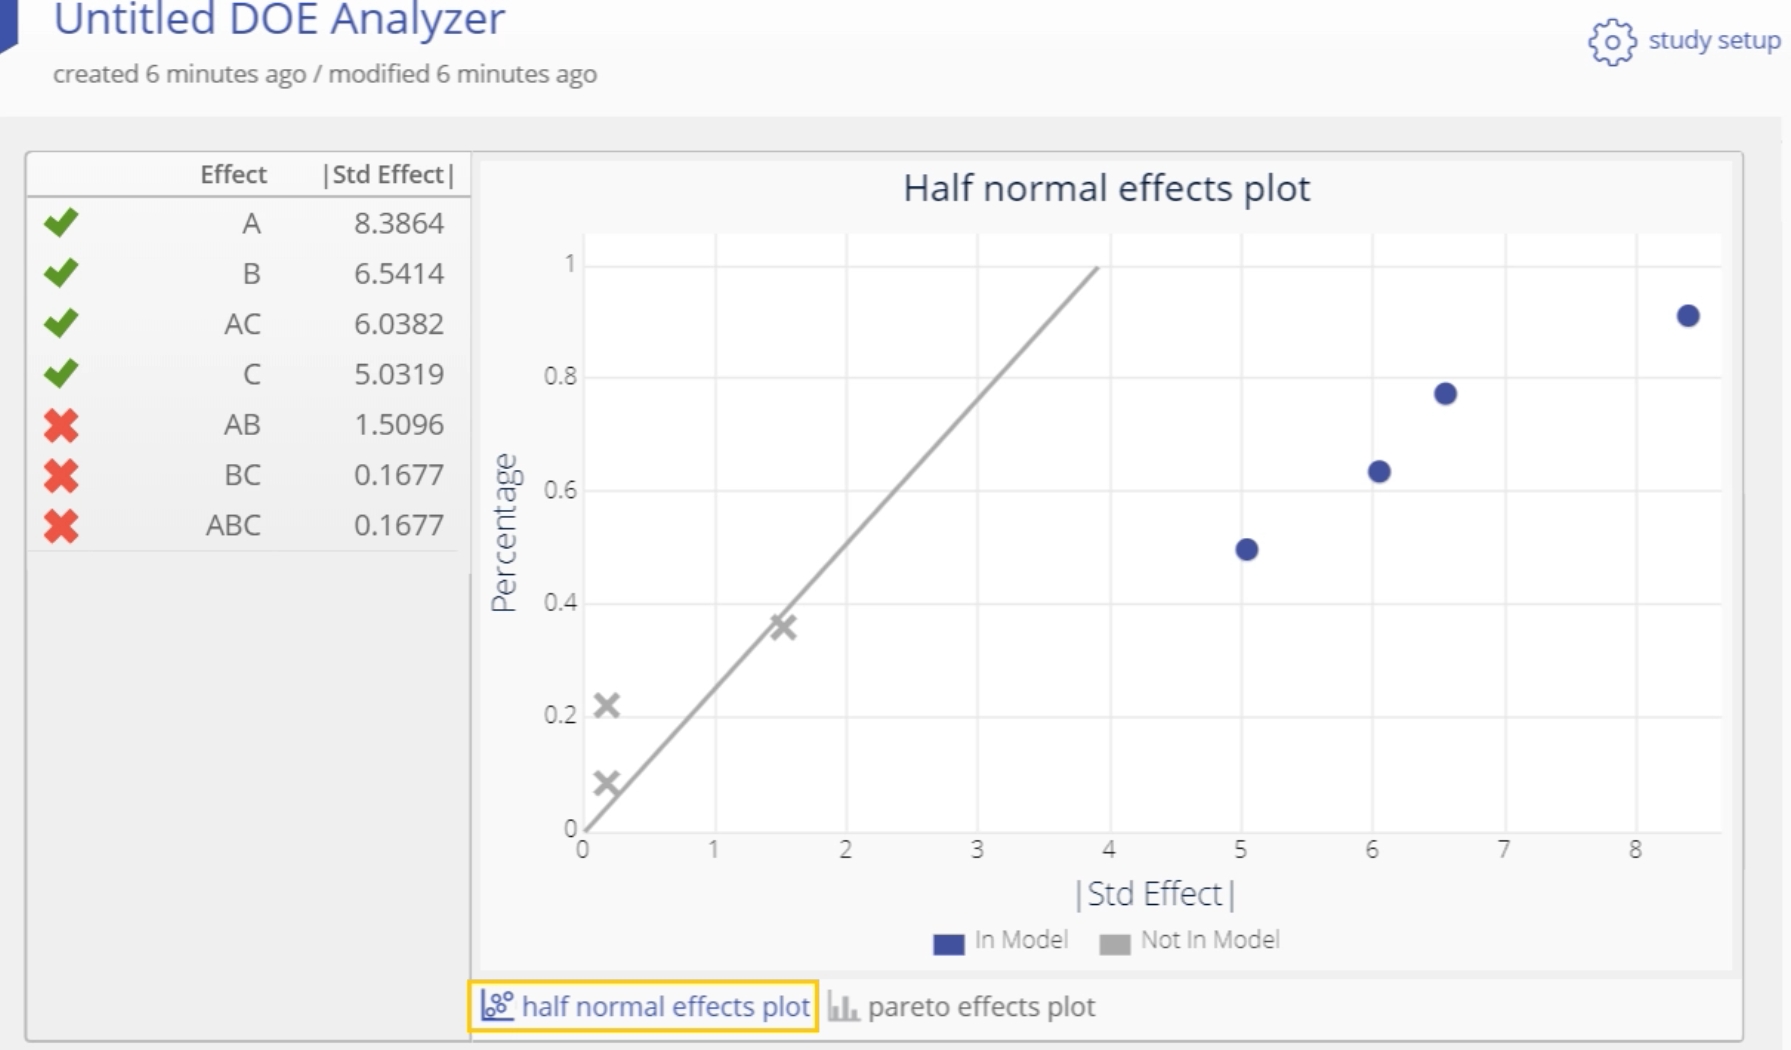 Full DOE half normal effects plot.